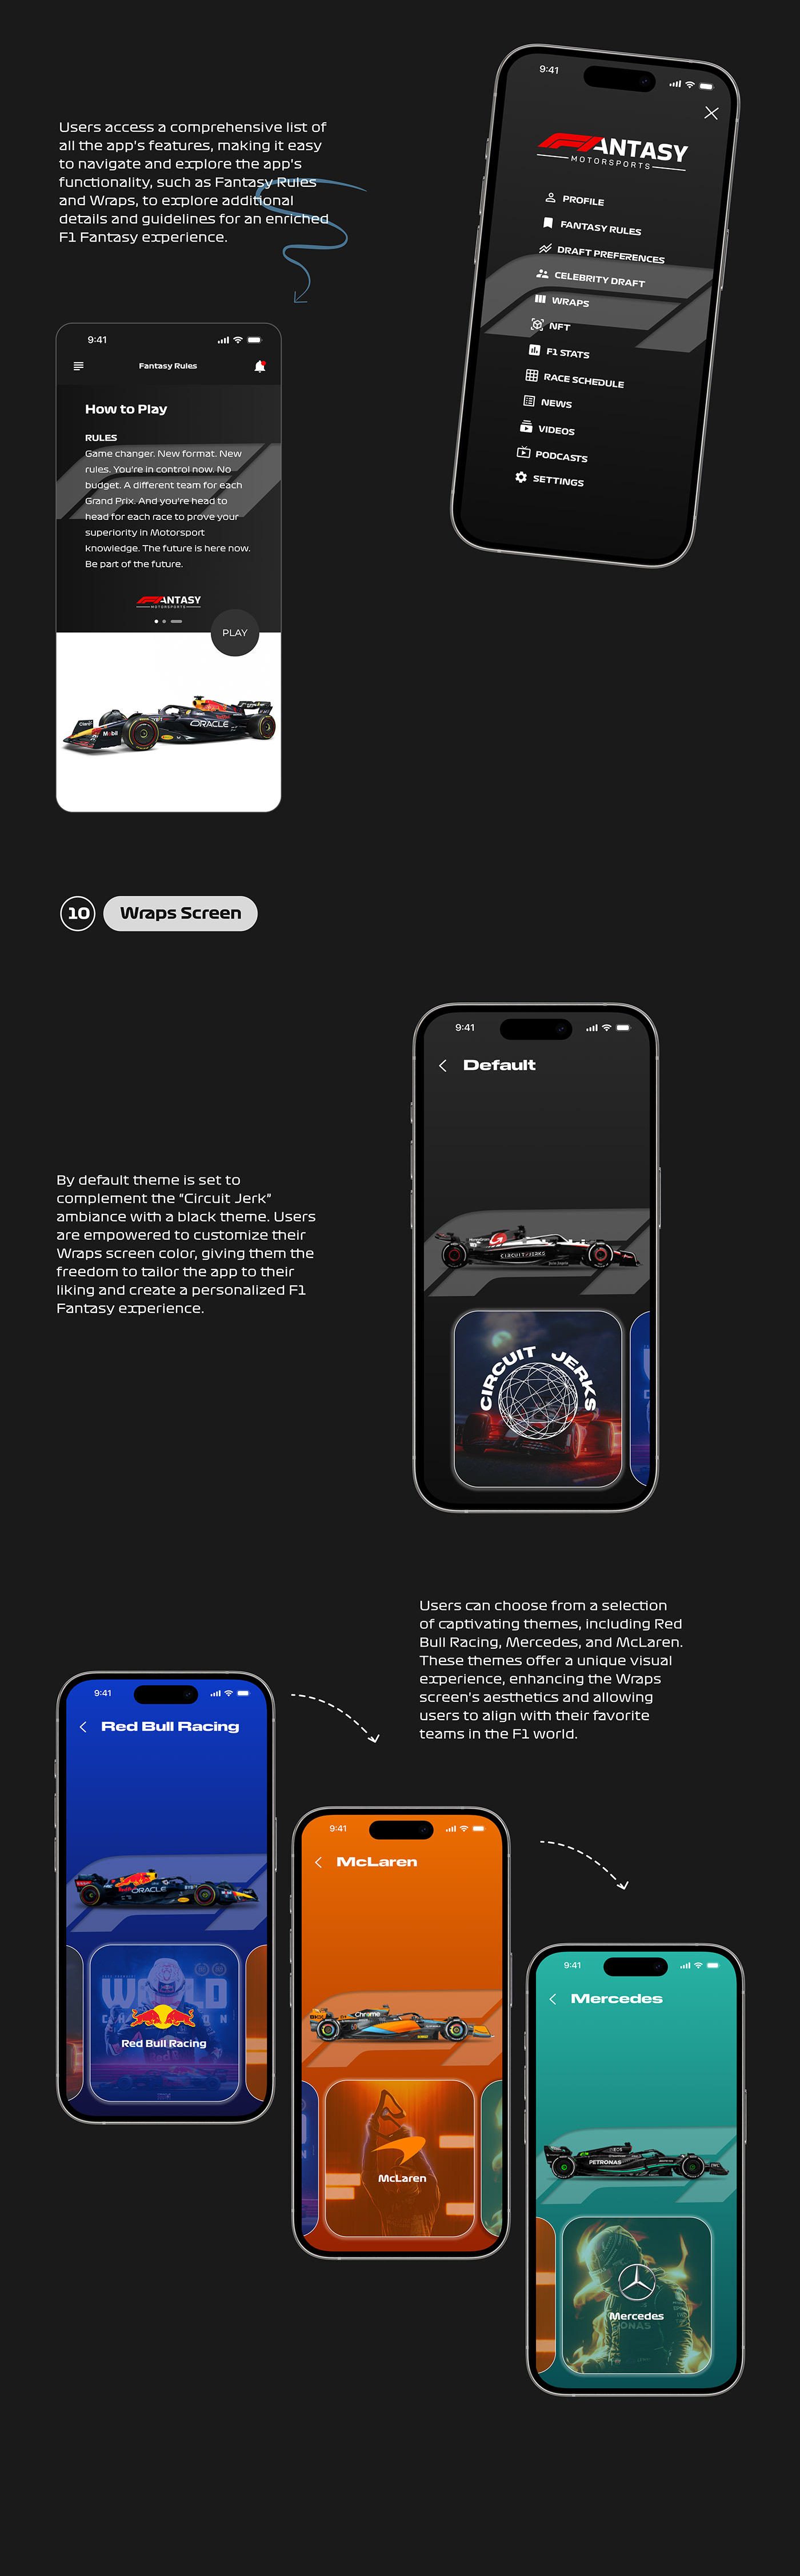 f1 Formula 1 race UI/UX formula one Motorsport app design fantasy Figma sports